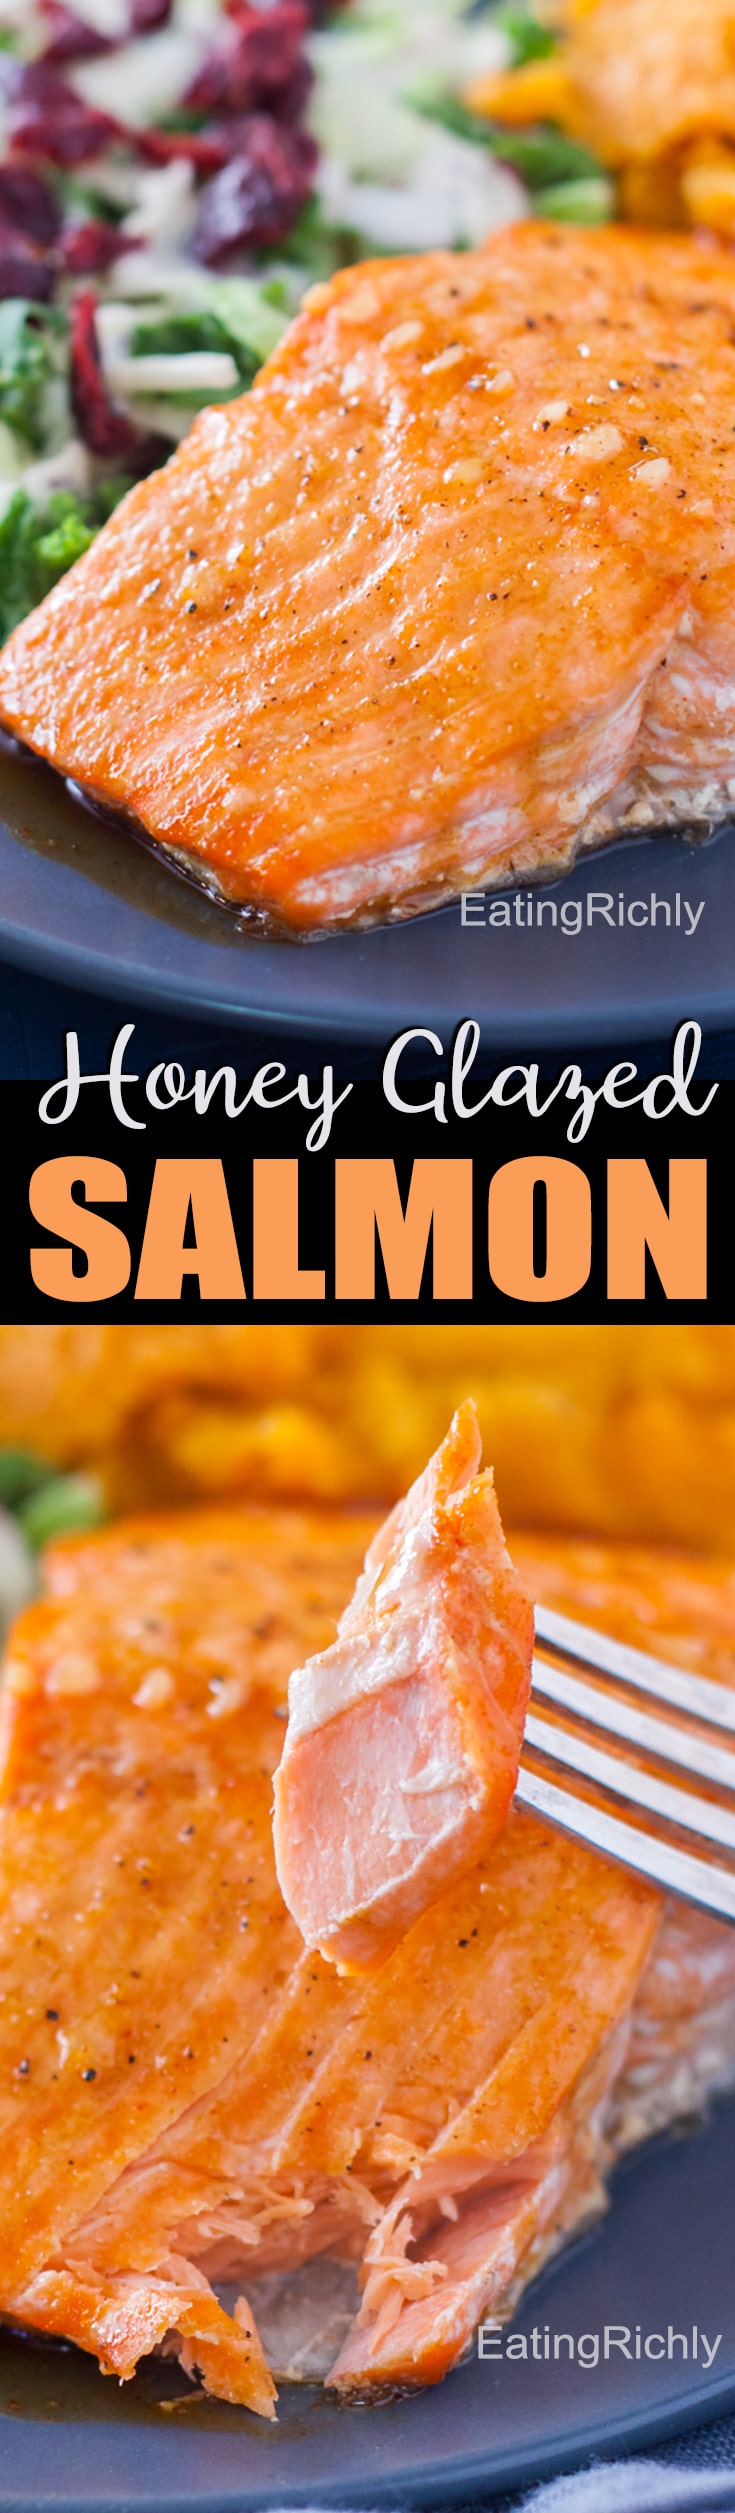 How to Make Honey Glazed Salmon